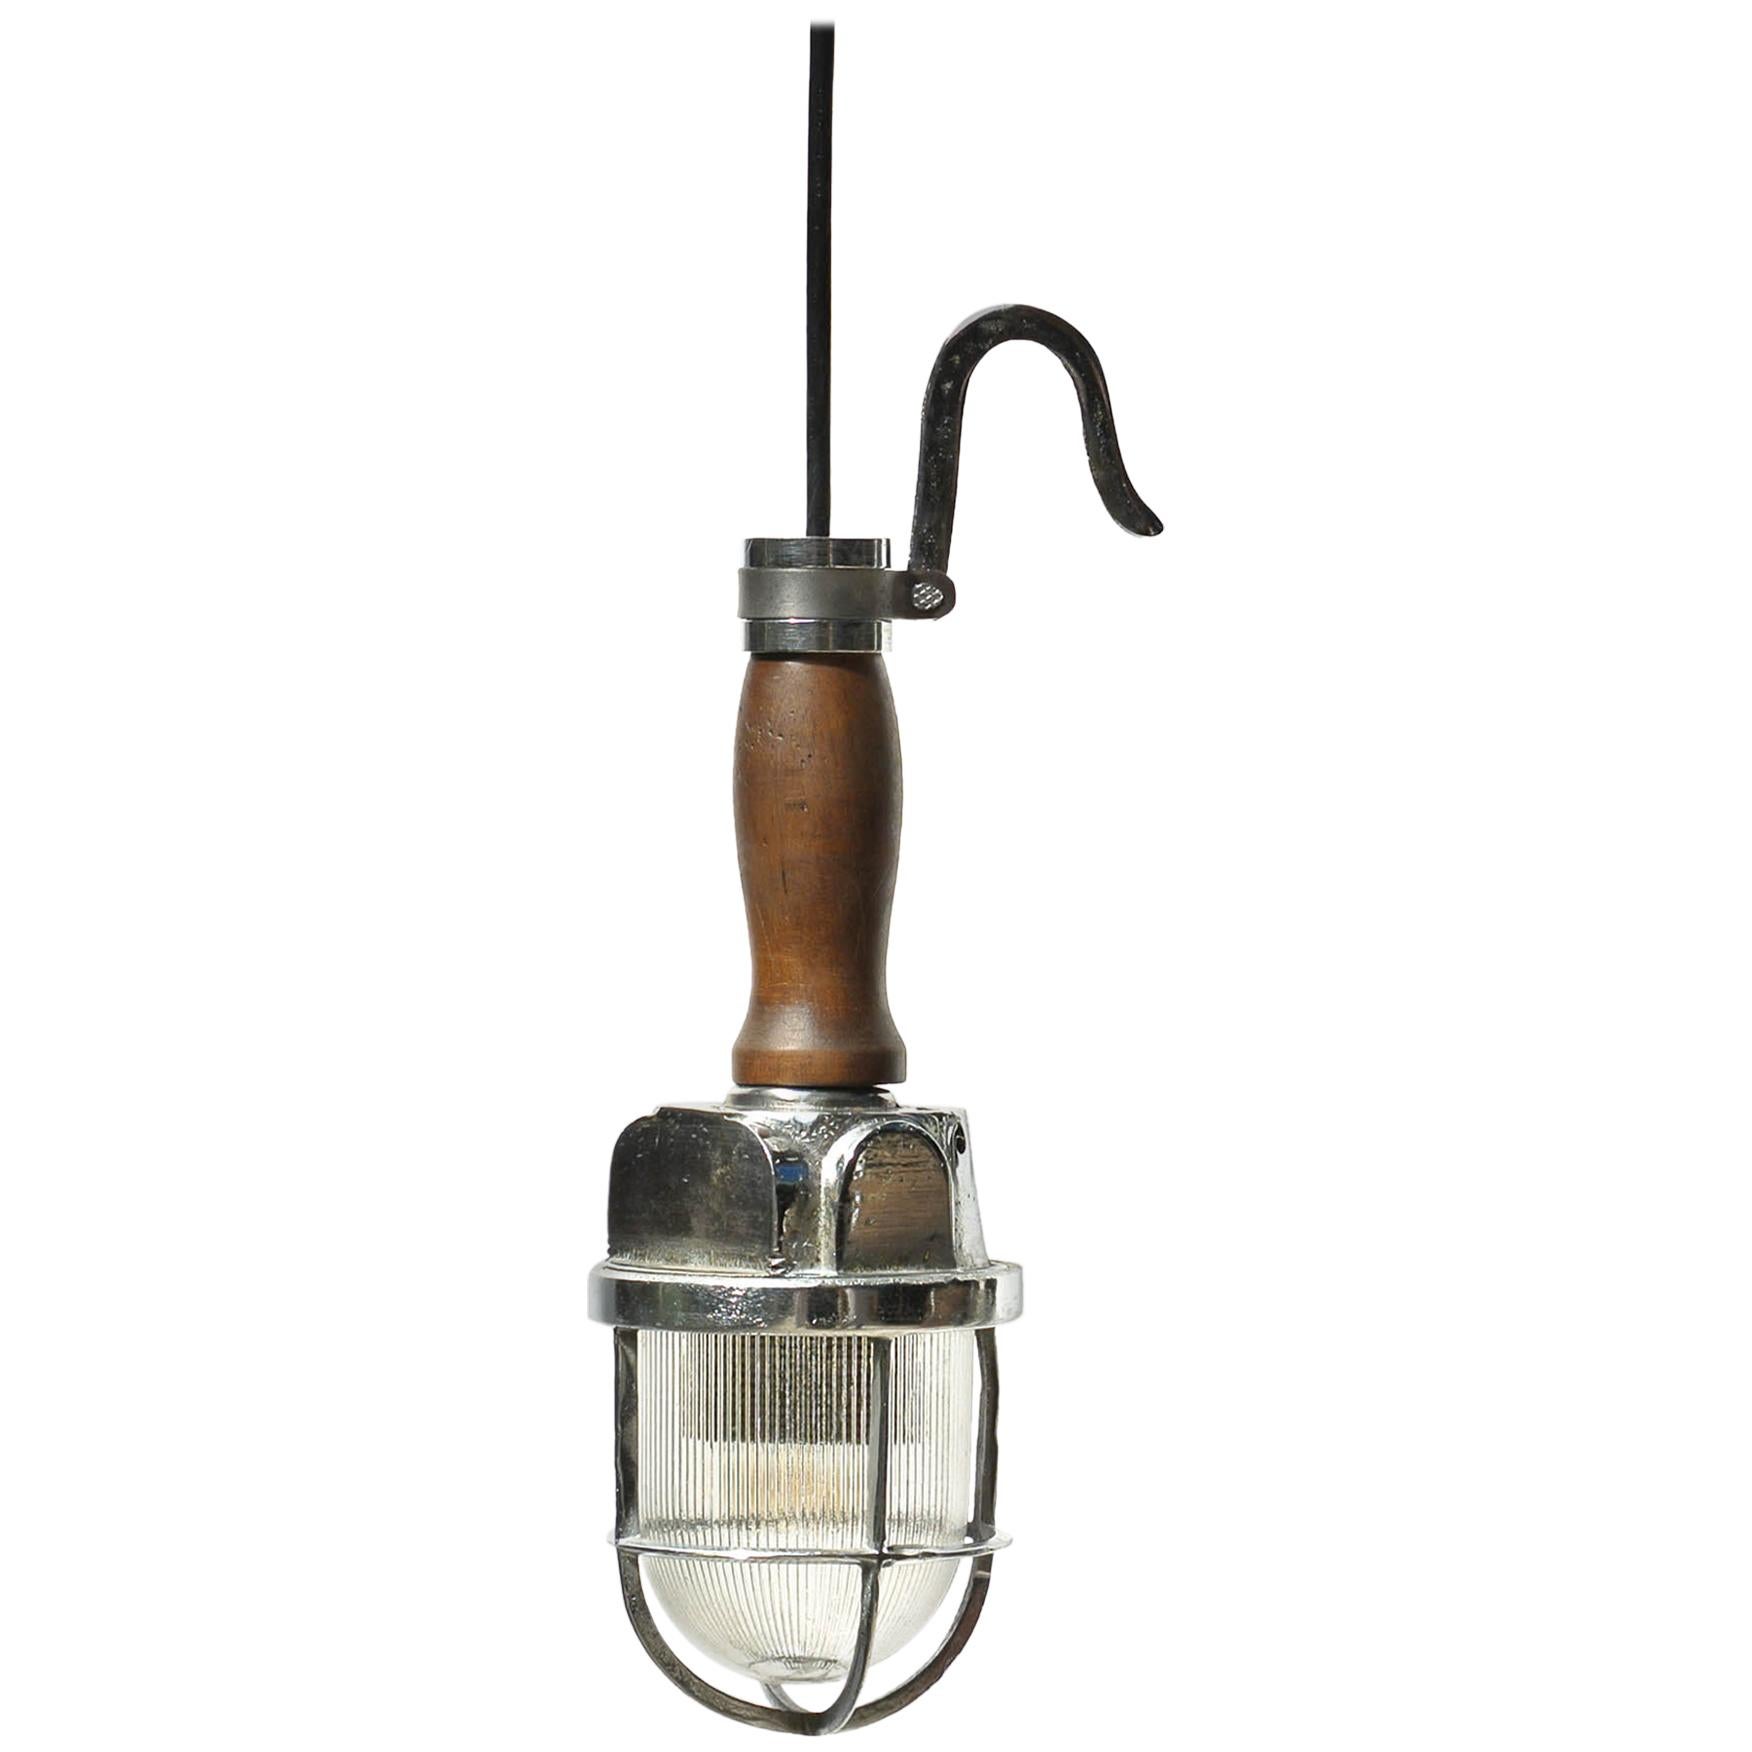 Small Portable Lamp with Corrugated Glass, circa 1950-1959